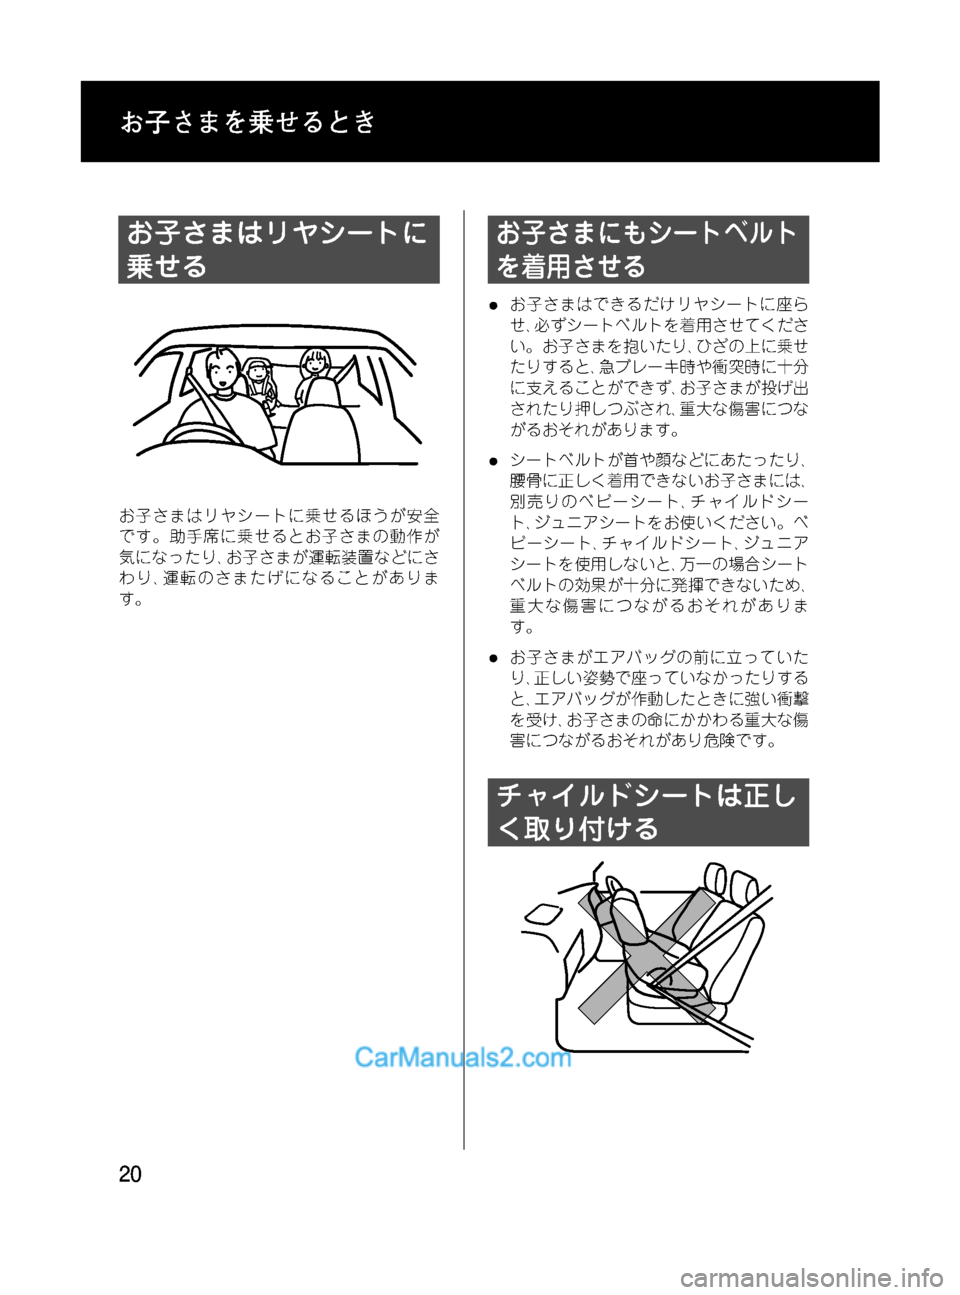 MAZDA MODEL VERISA 2007  ベリーサ｜取扱説明書 (in Japanese) Black plate (20,1)
お子さまはリヤシートに
乗せる
お子さまはリヤシートに乗せるほうが安全
です。助手席に乗せるとお子さまの動作が
気になったり､